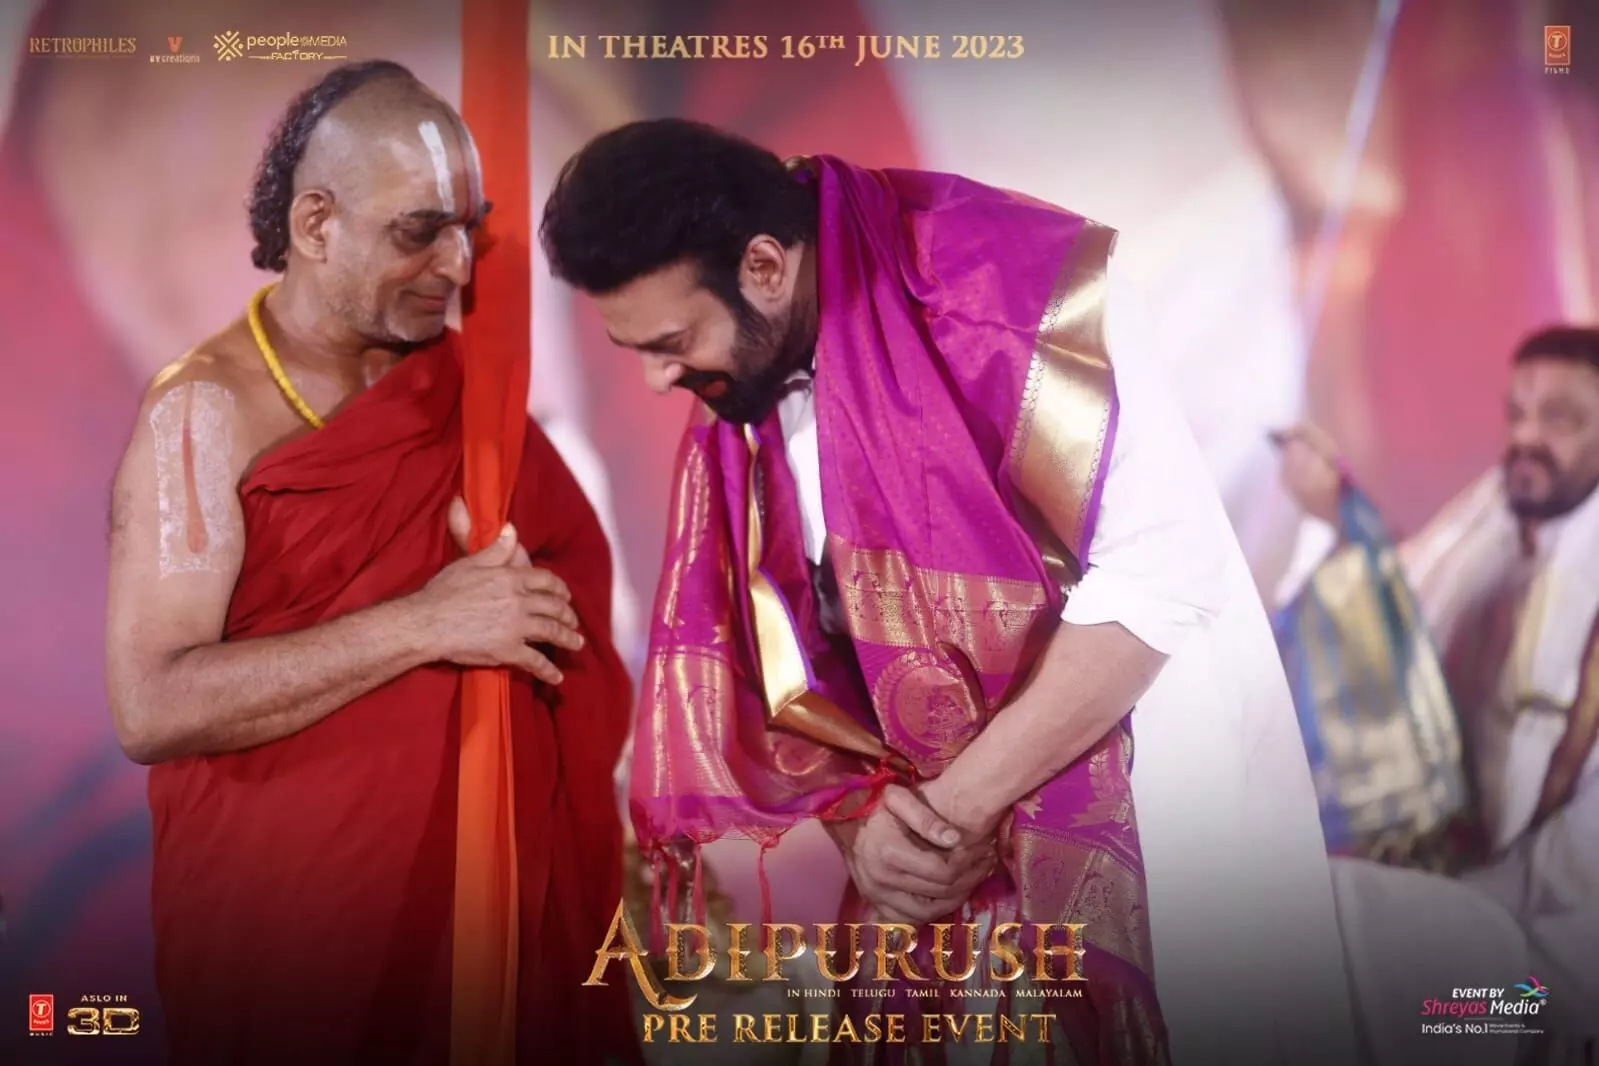 Adipurush creates history in bringing the greatness of Lord Sriram for the new generation: Chinna Jeeyar Swami